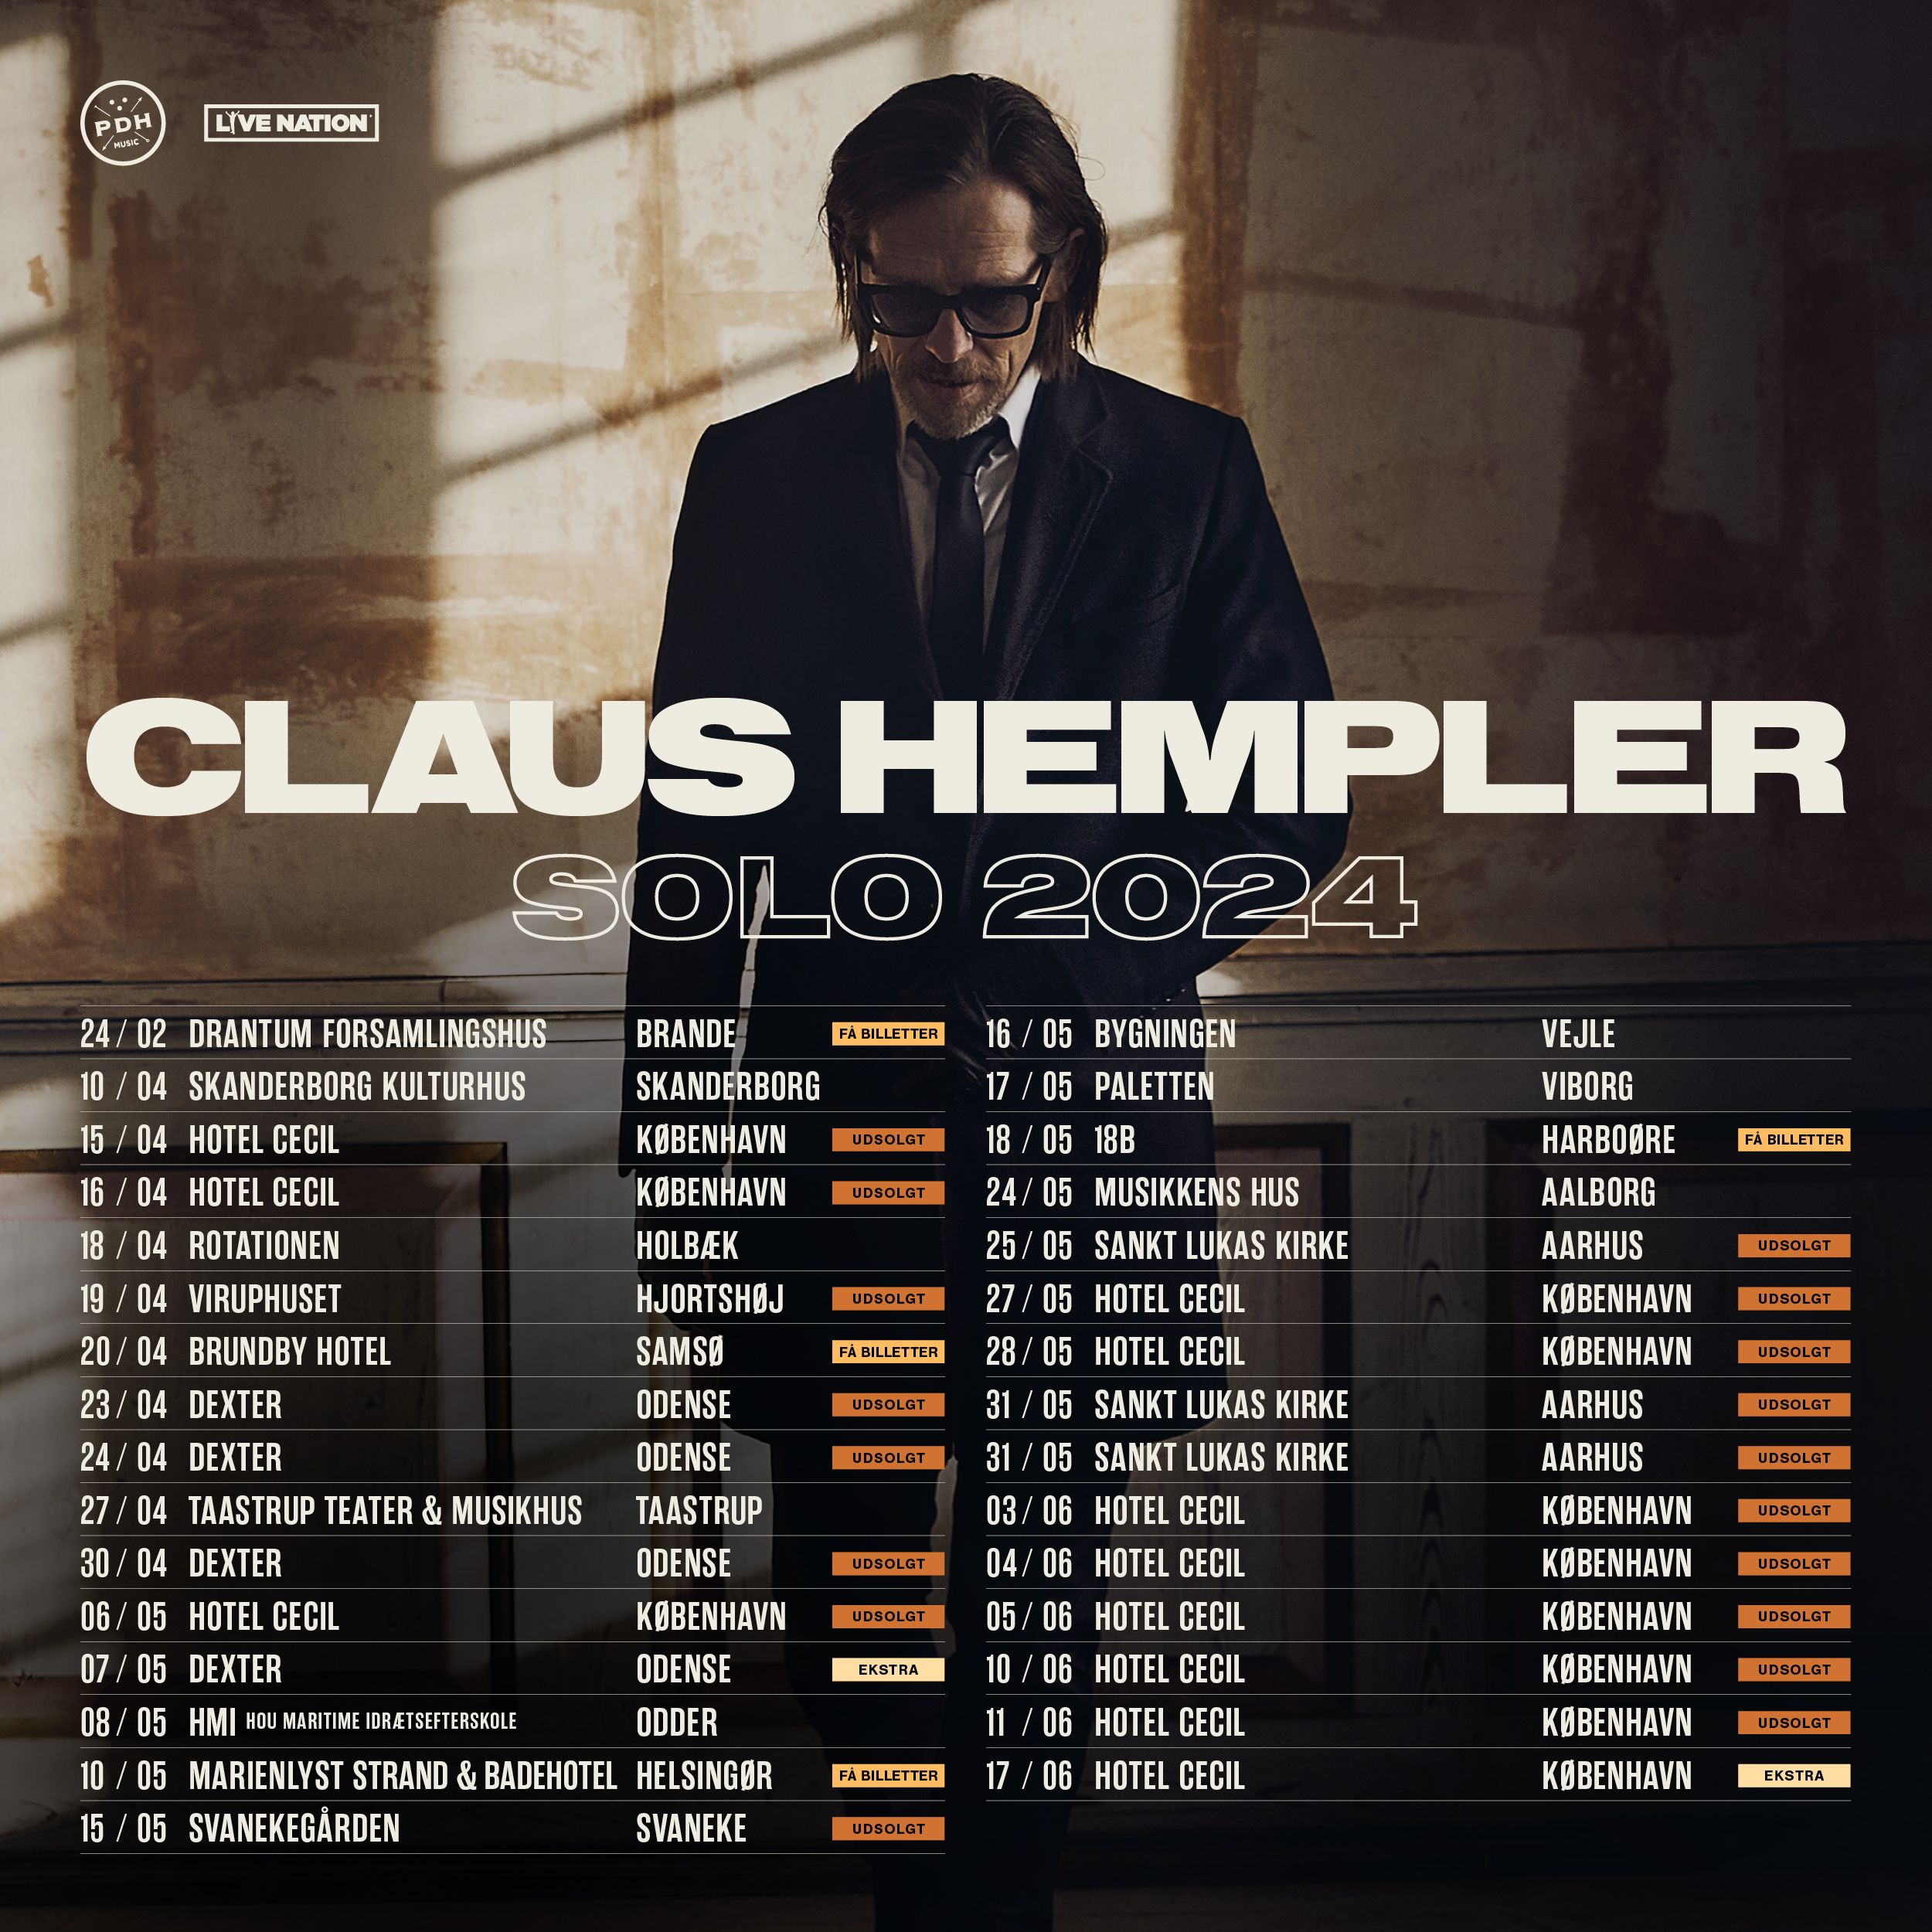 Claus Hempler